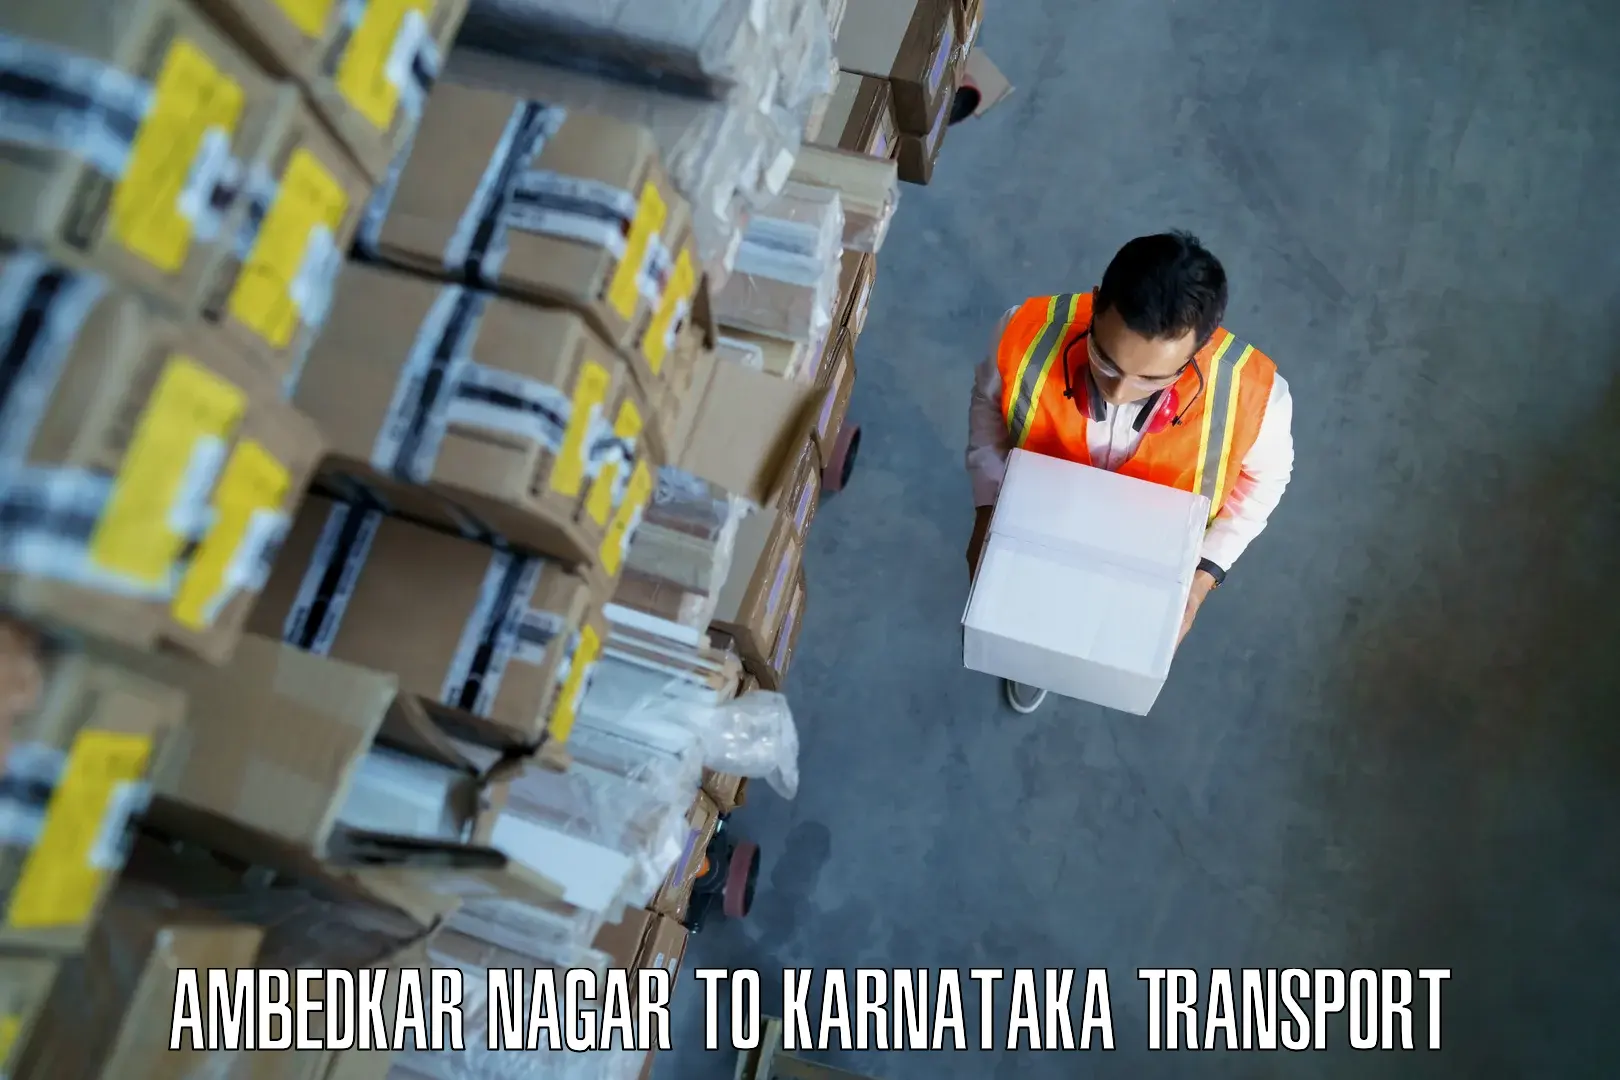 Delivery service Ambedkar Nagar to Karnataka